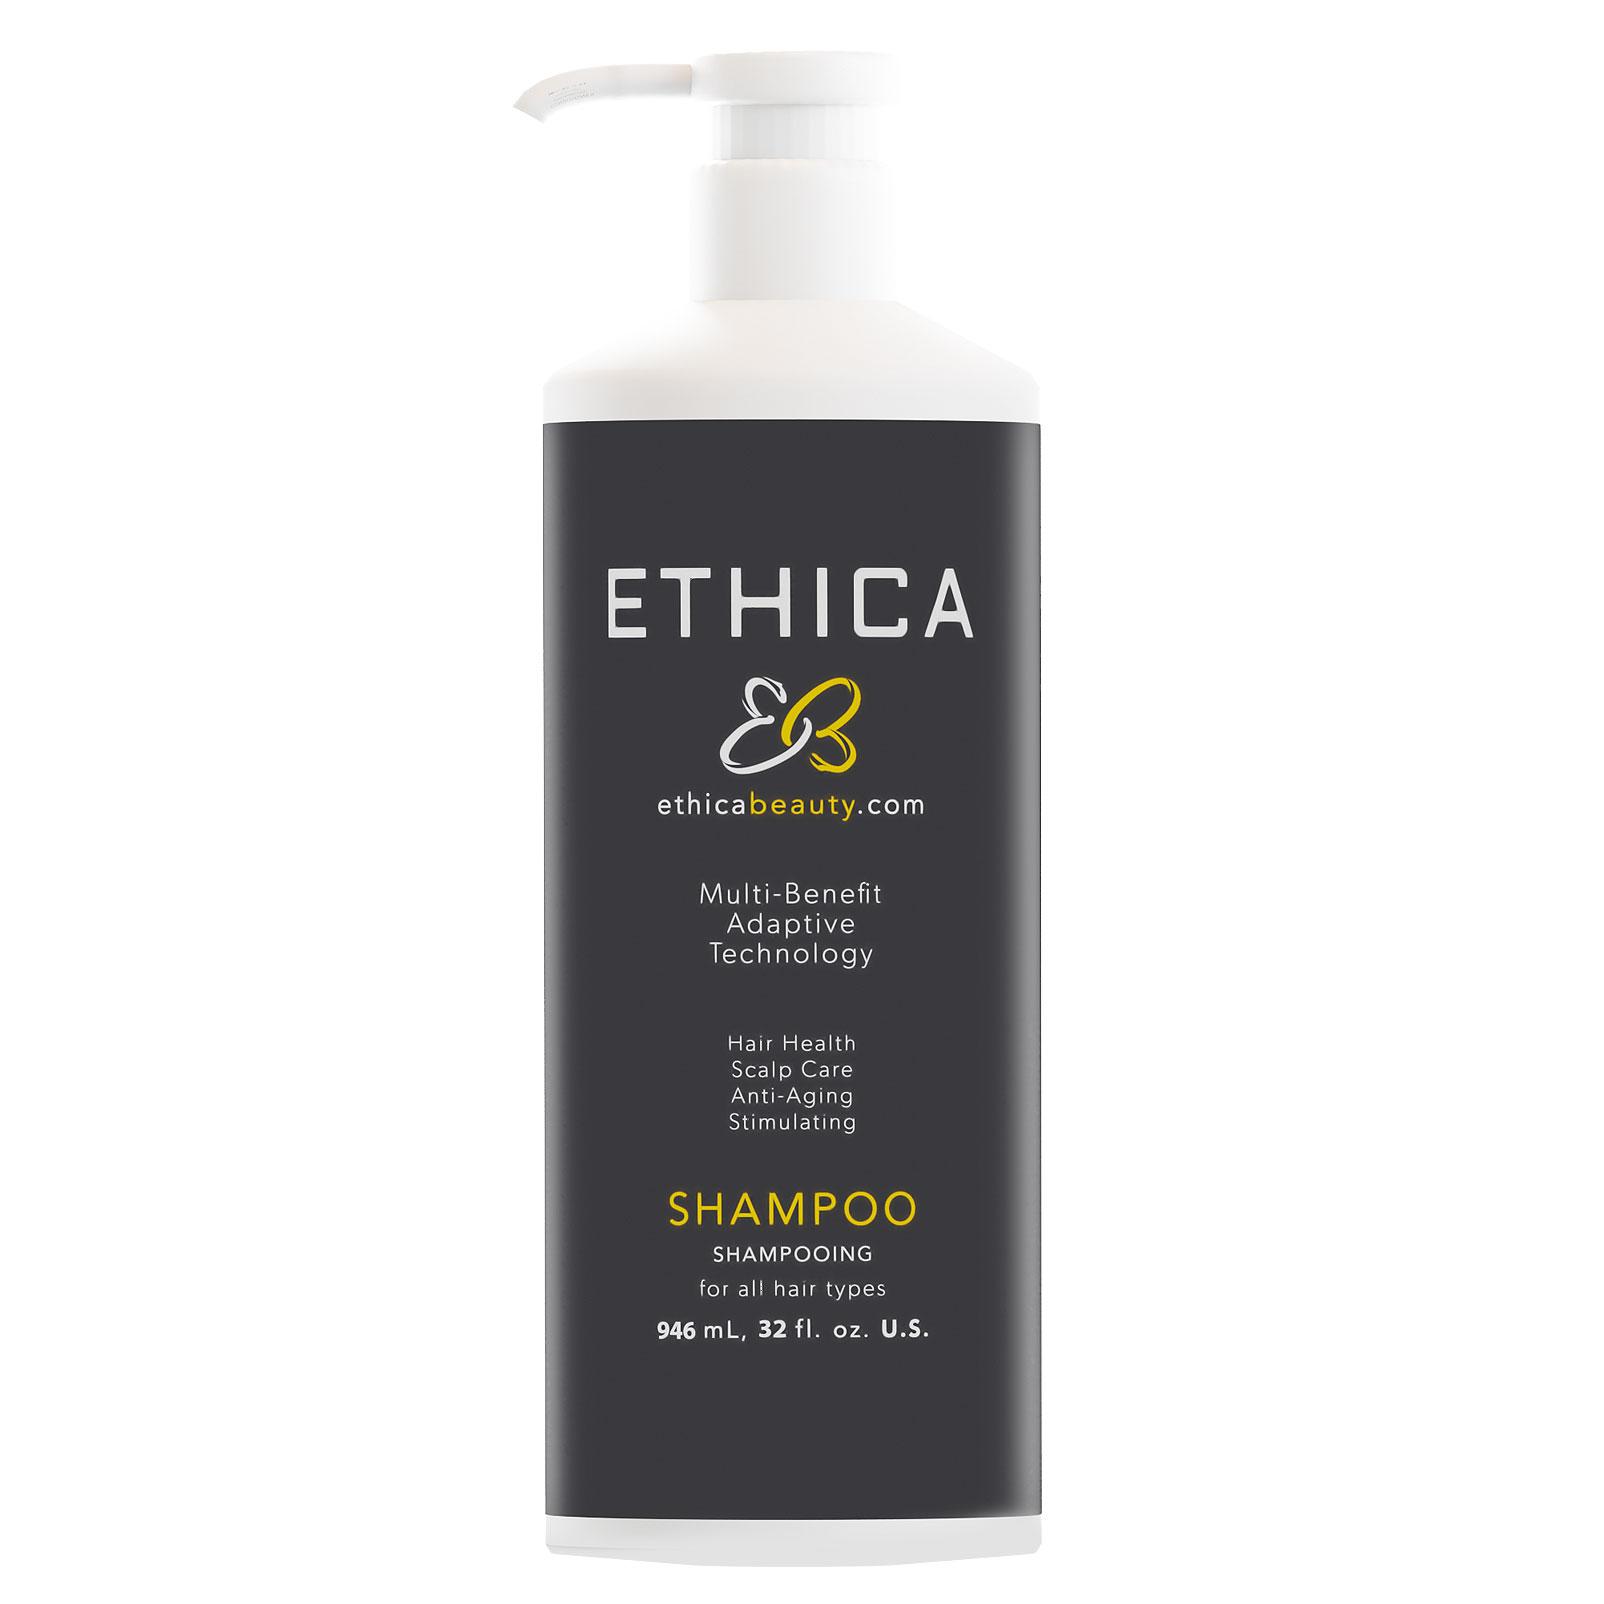 Ethica Anti-Aging Daily Shampoo 32oz